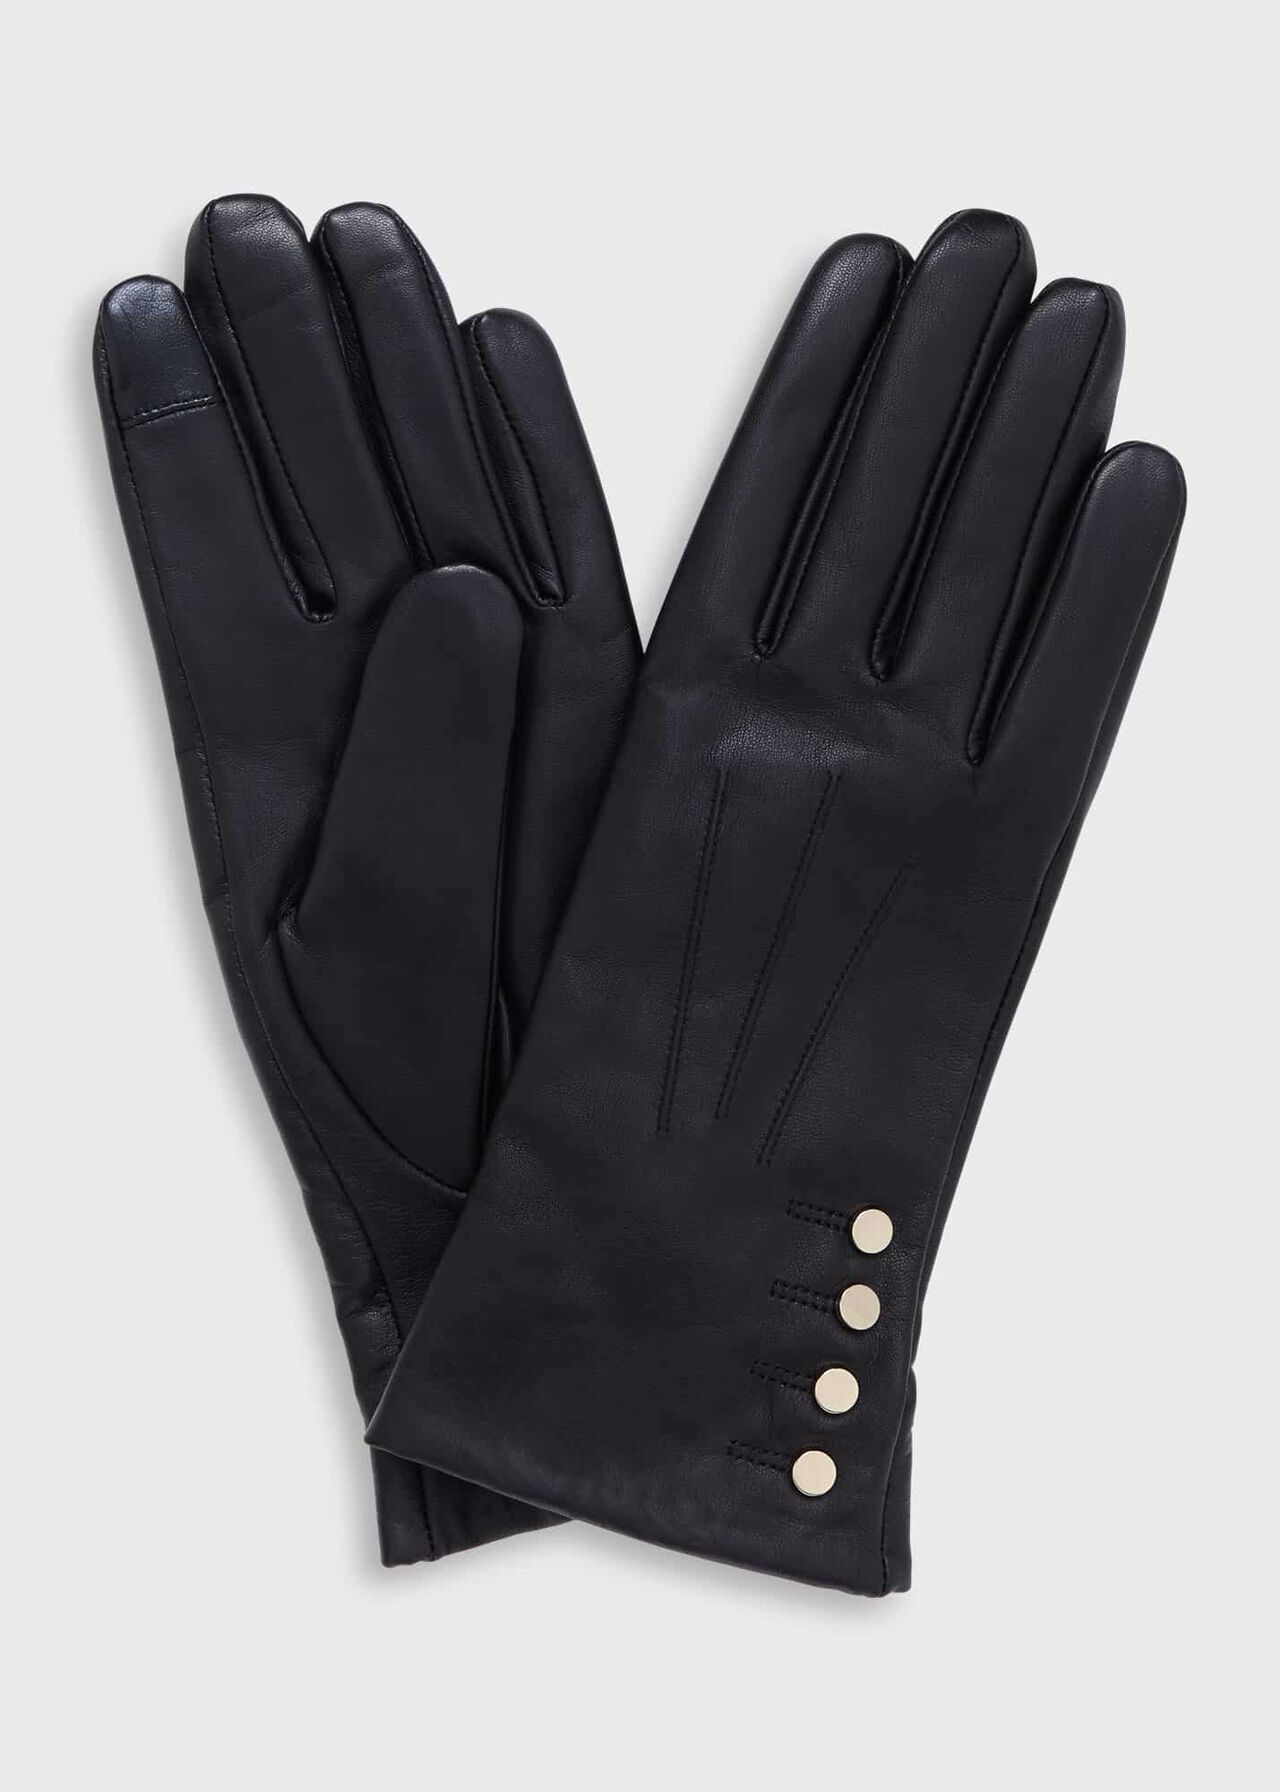 Sienna Leather Glove, Black, hi-res